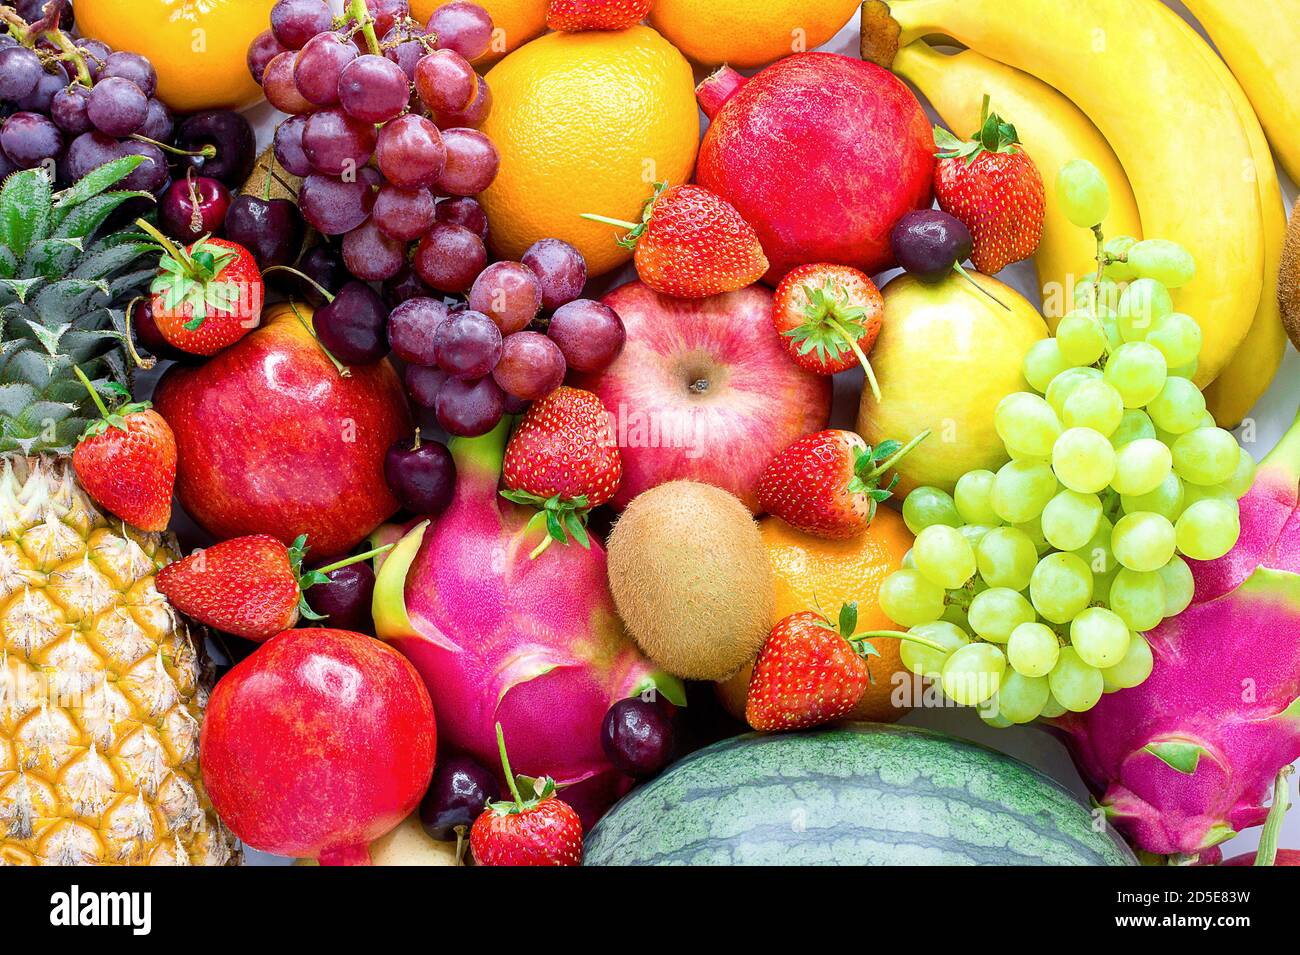 https://c8.alamy.com/comp/2D5E83W/fresh-fruitsassorted-fruits-colorfulclean-eatingfruit-background-2D5E83W.jpg